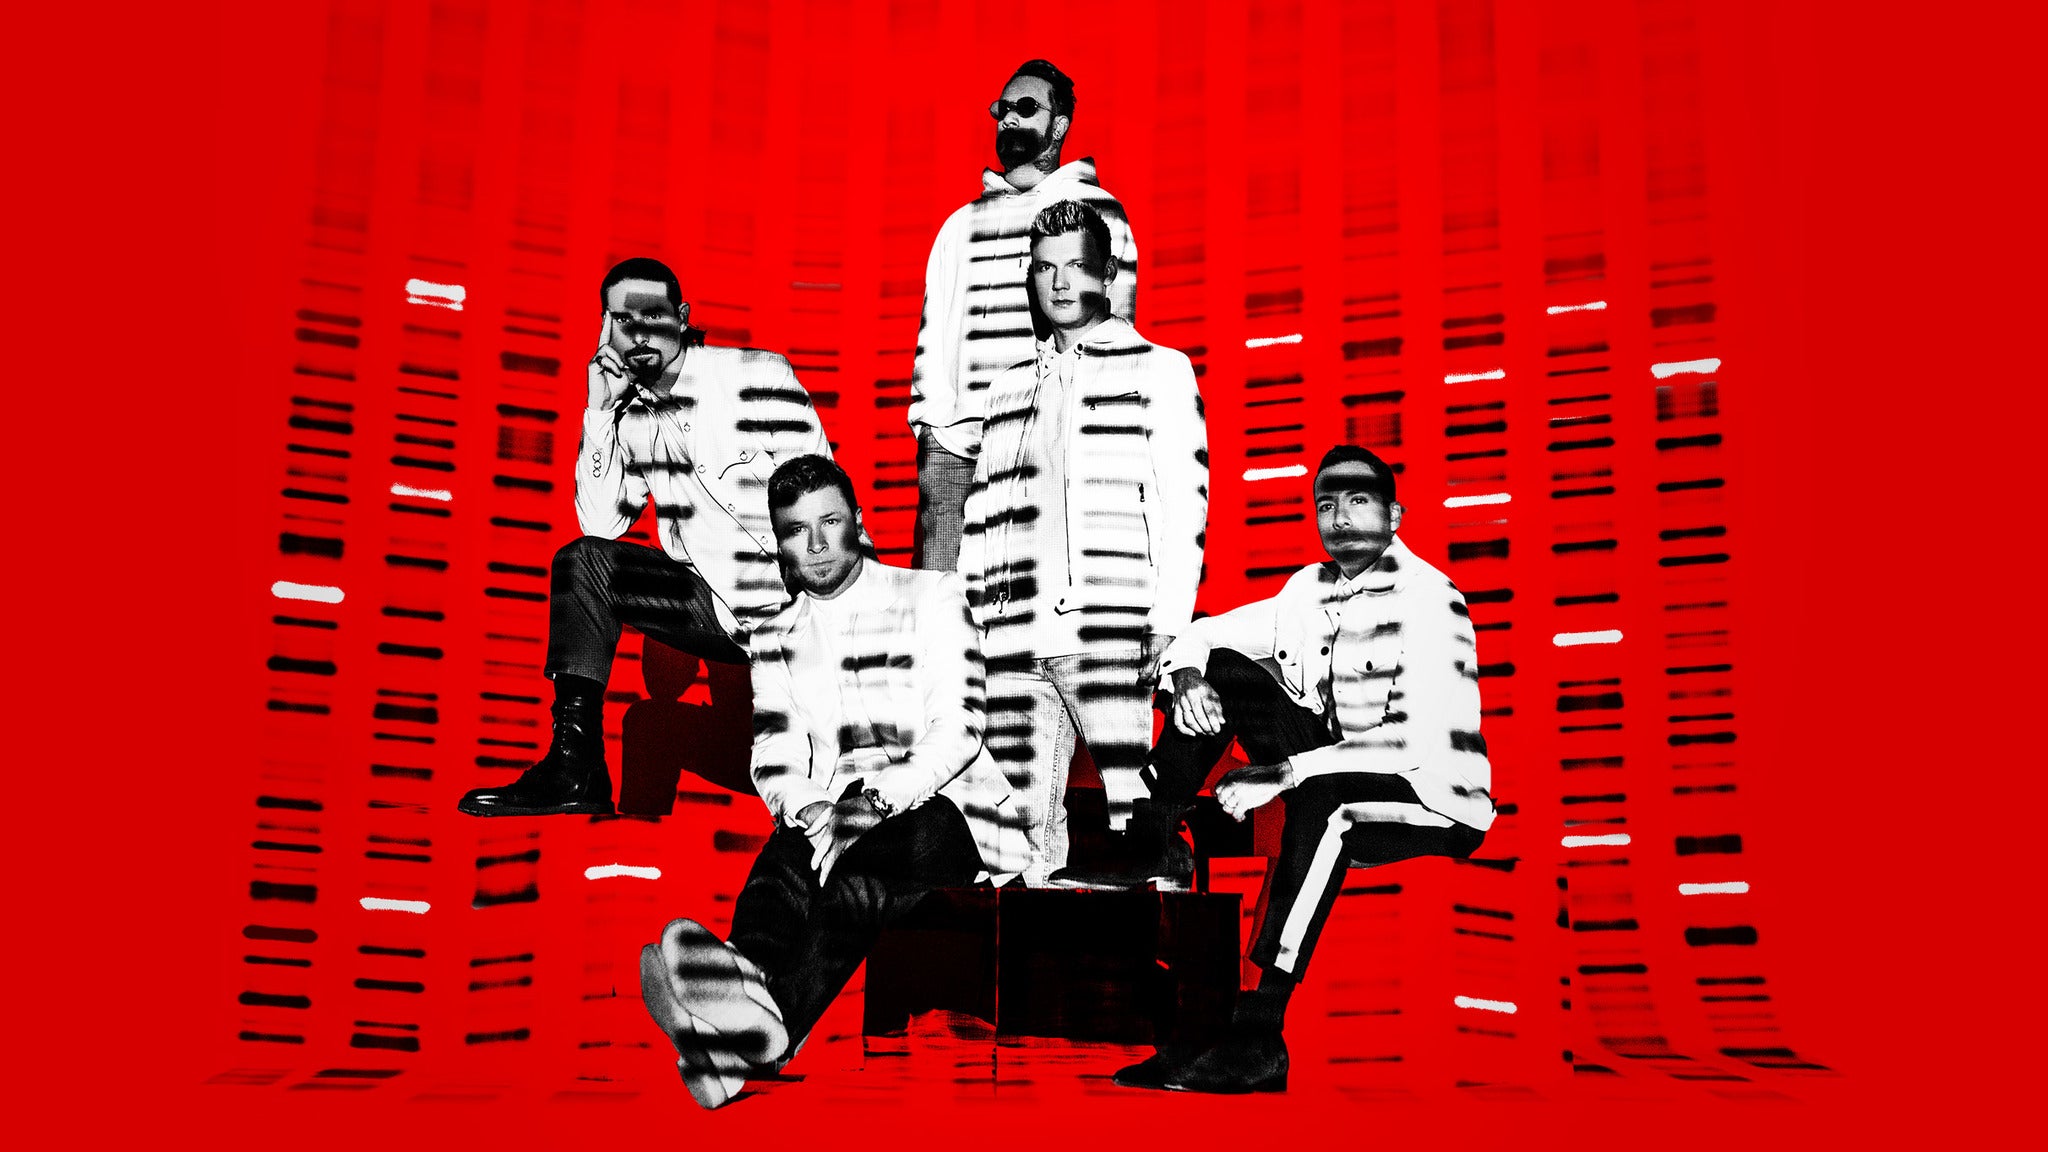 Backstreet Boys: DNA World Tour in Las Vegas promo photo for Official Platinum presale offer code